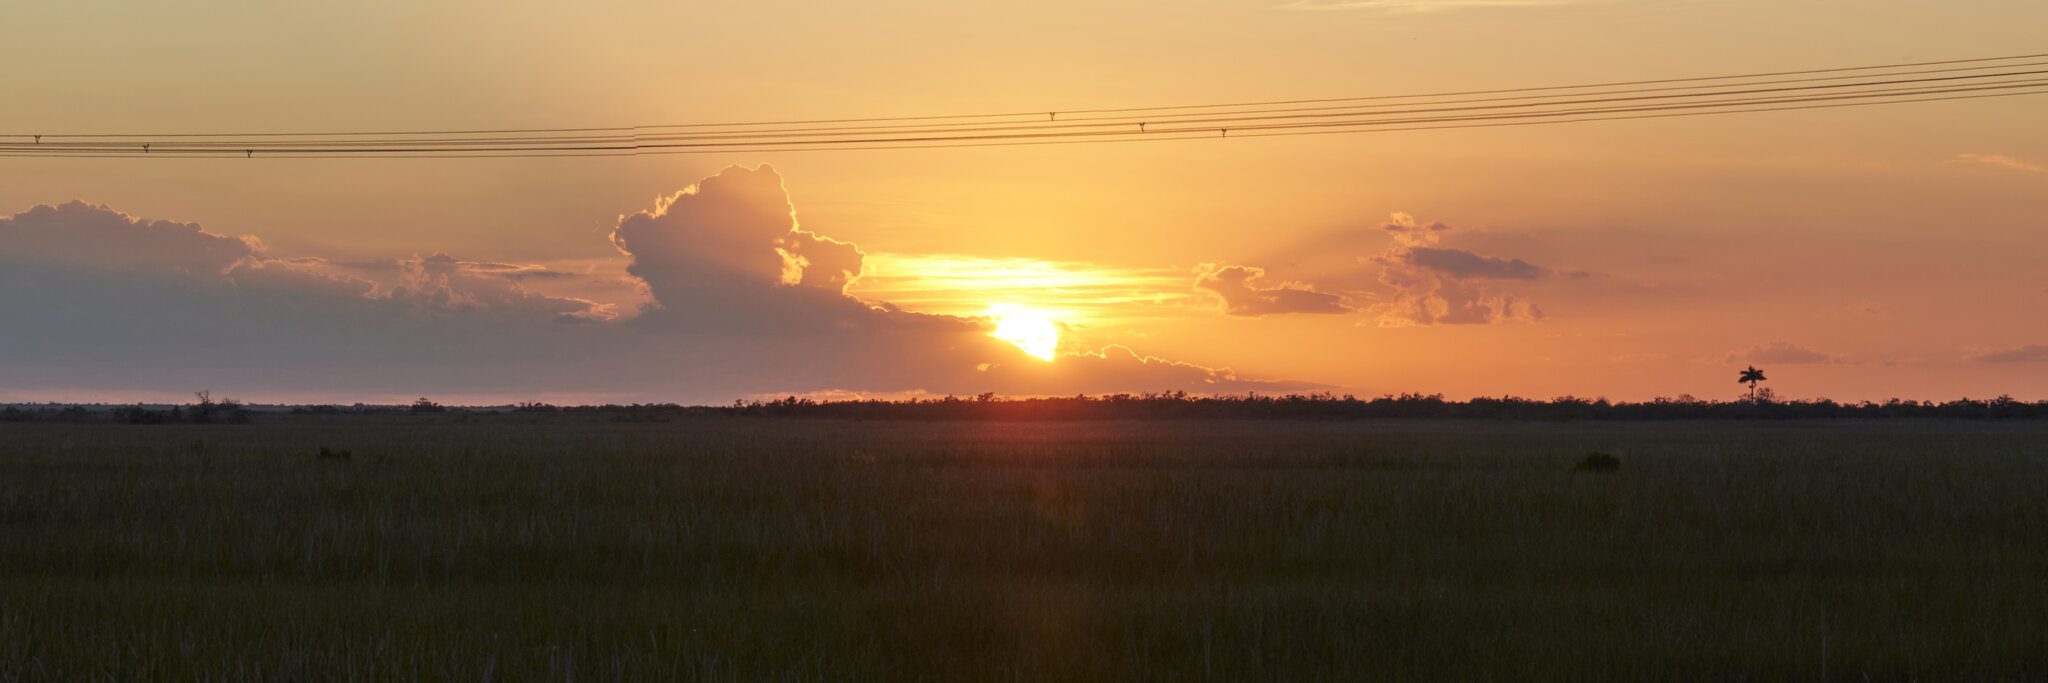 Sunset_Panorama1.1.jpg